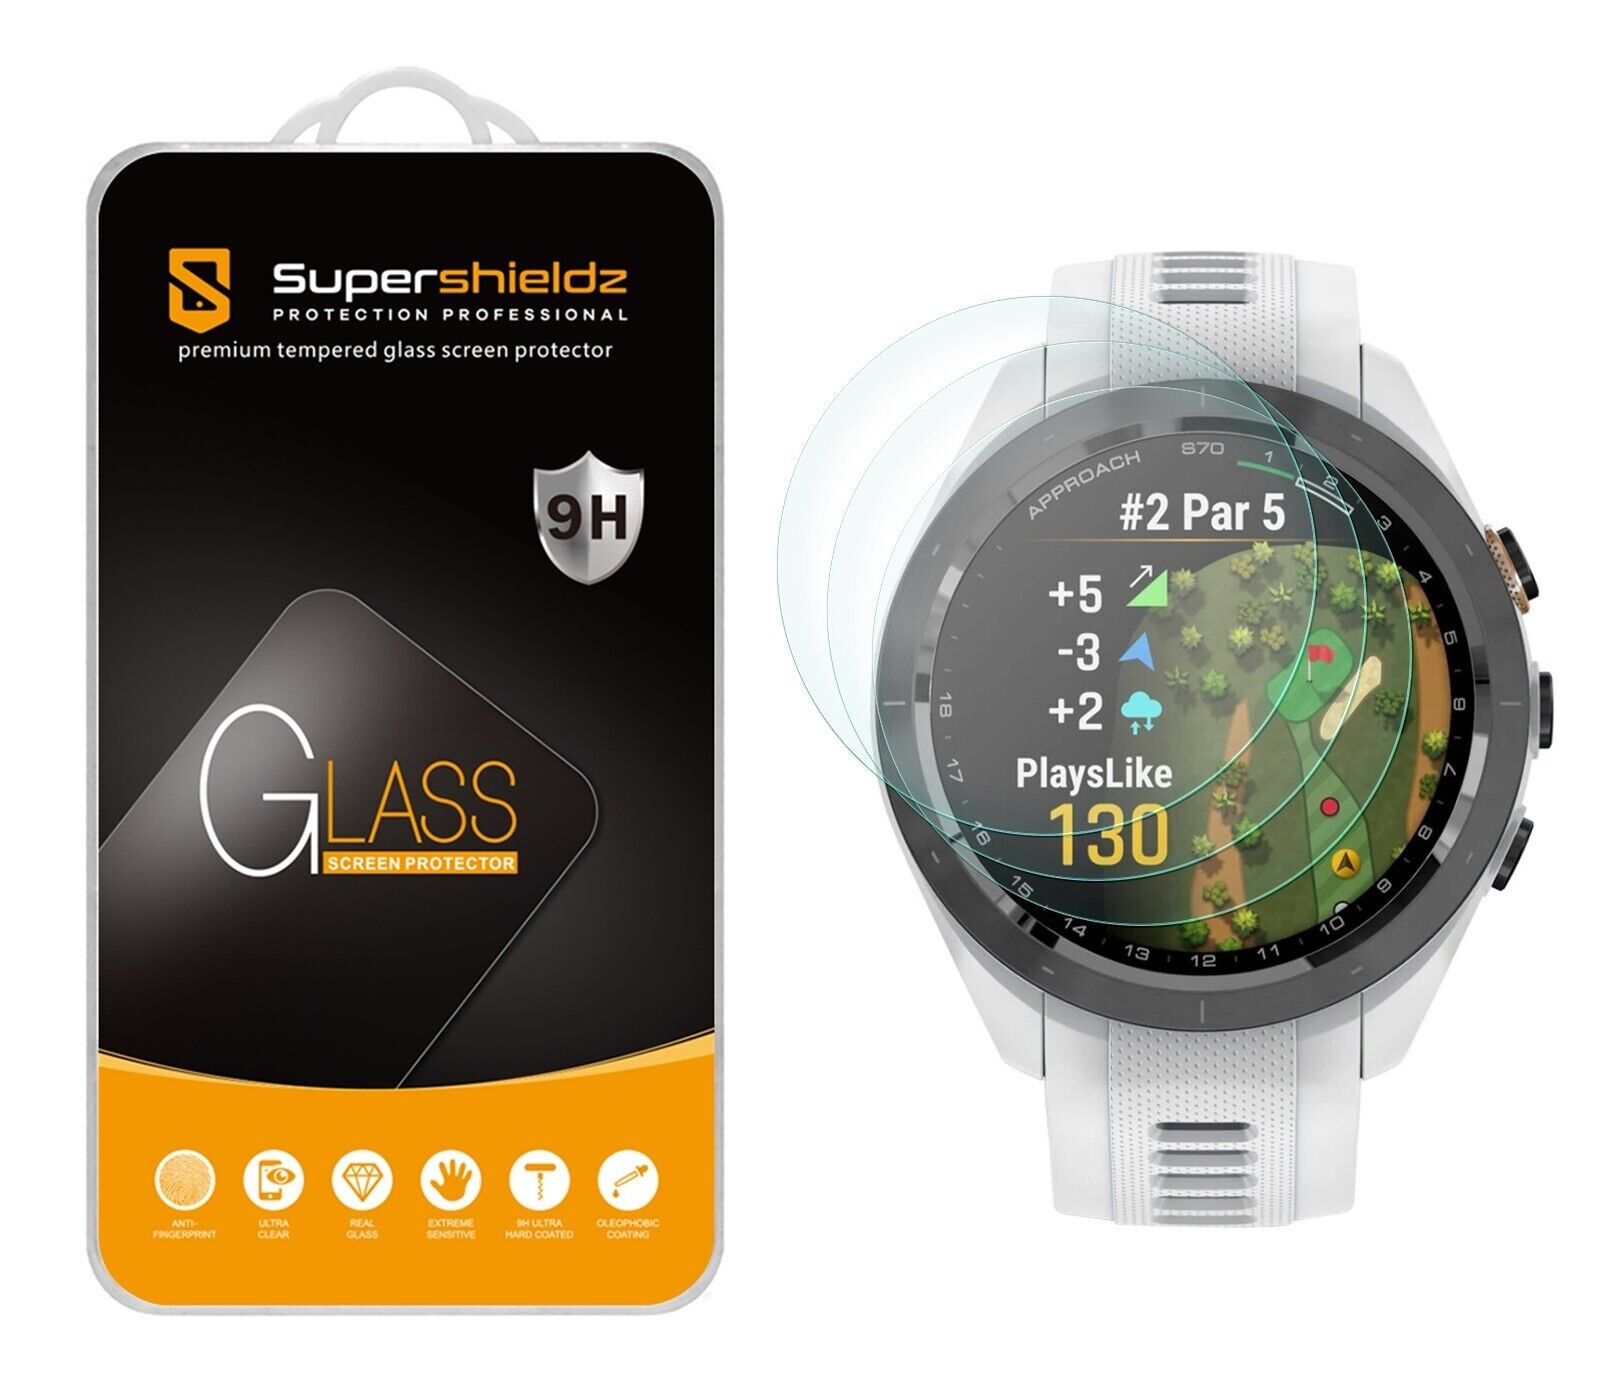 Furnace Skab komfort 3X Supershieldz Tempered Glass Screen Protector for Garmin Approach S70  (42mm) | eBay